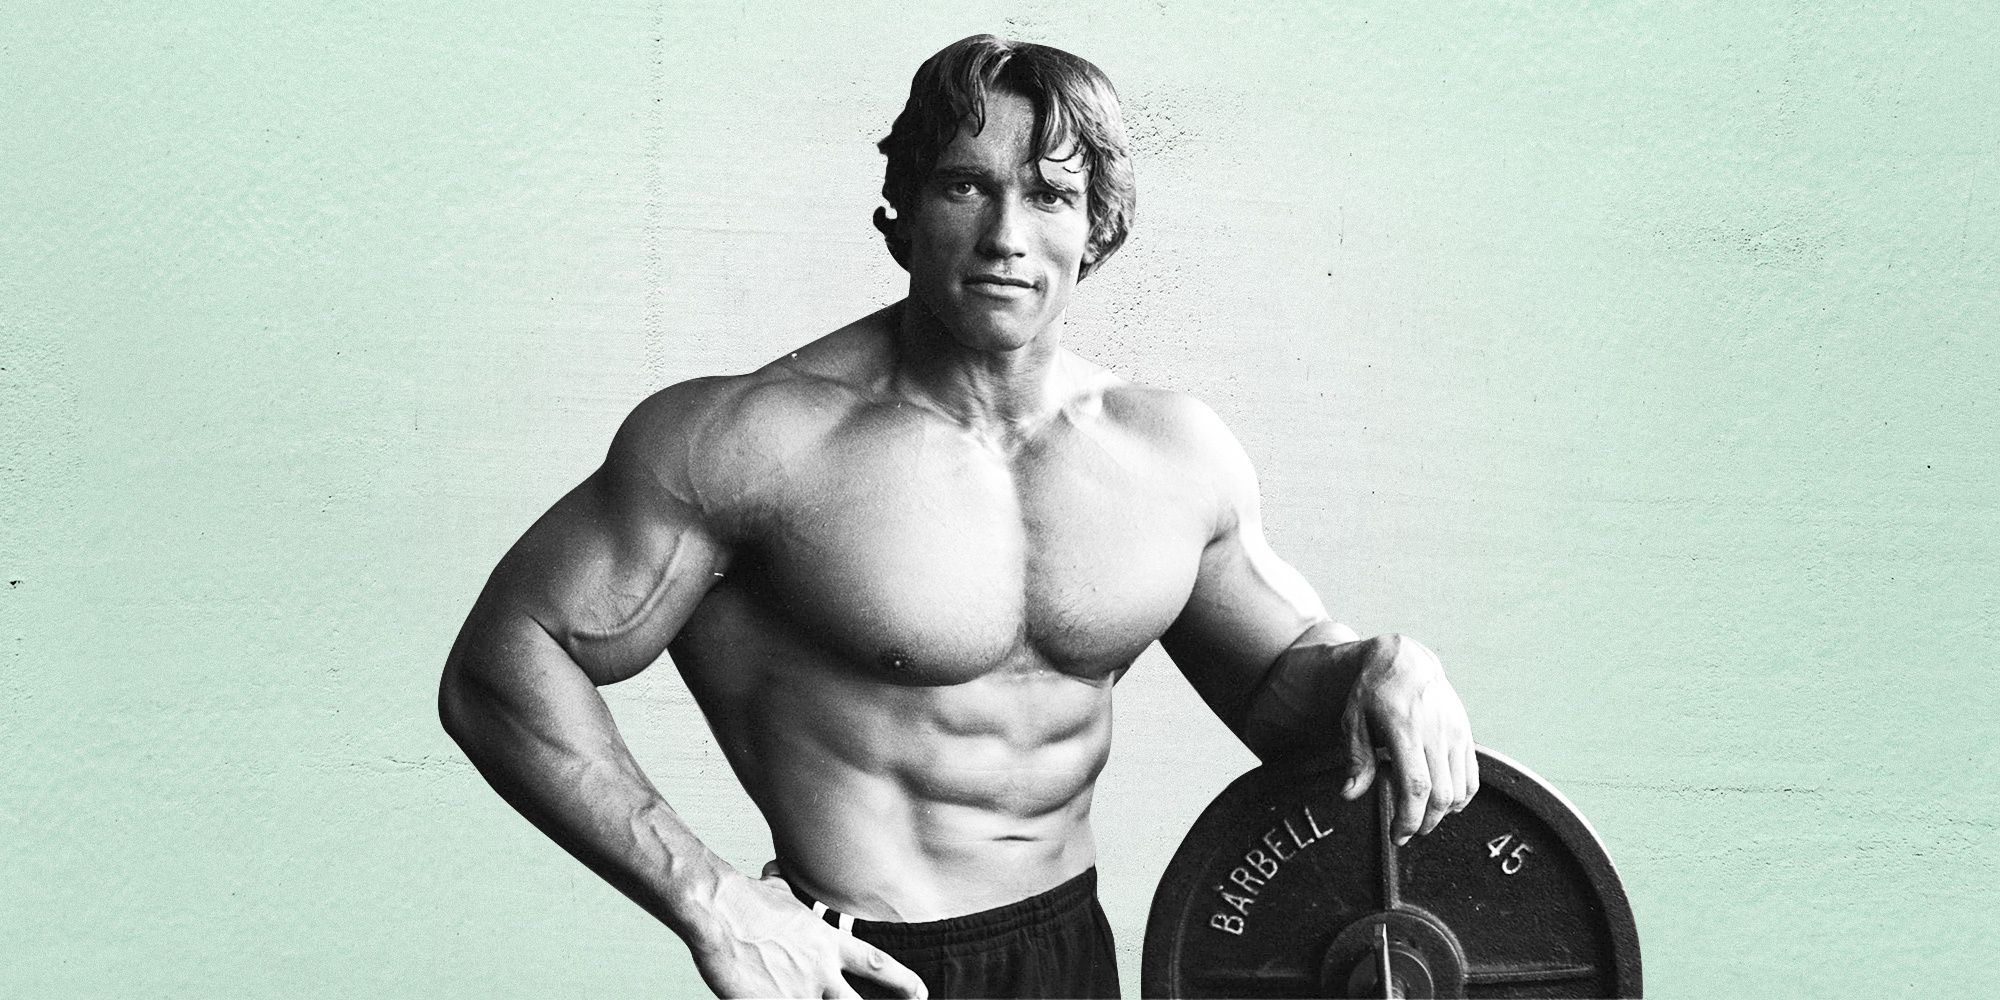 LOOK: Arnold Schwarzenegger's son recreates famous 'Mr. Olympia'  bodybuilding pose - CBSSports.com